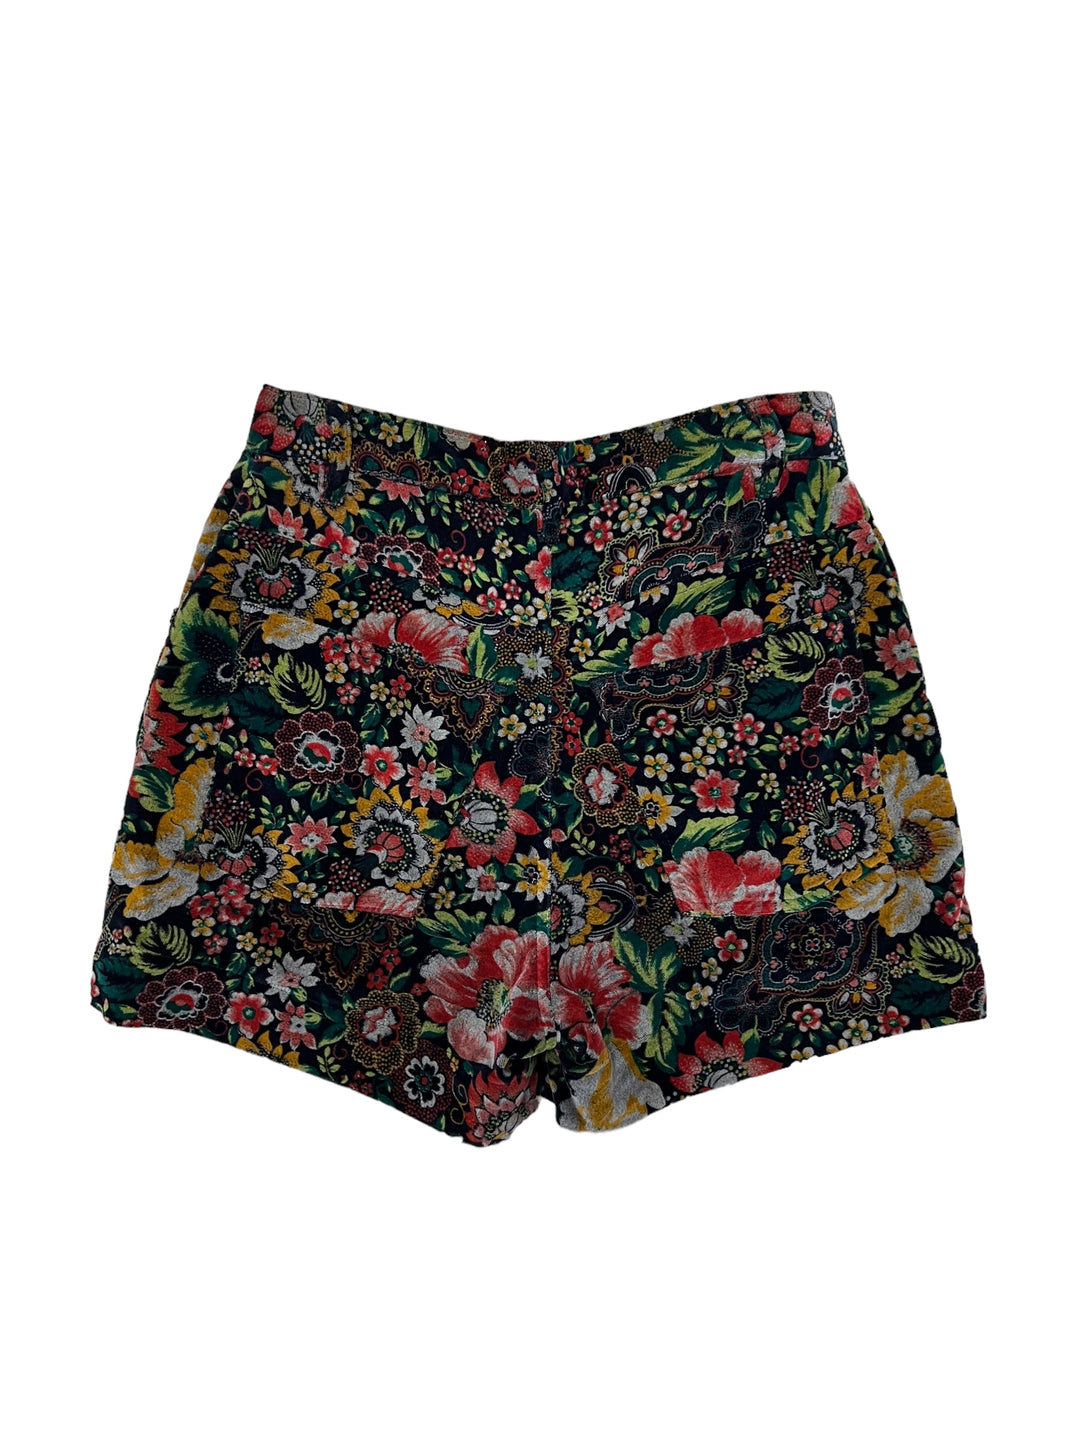 KENZO Vintage 80’s velour printed shorts women’s small(36)